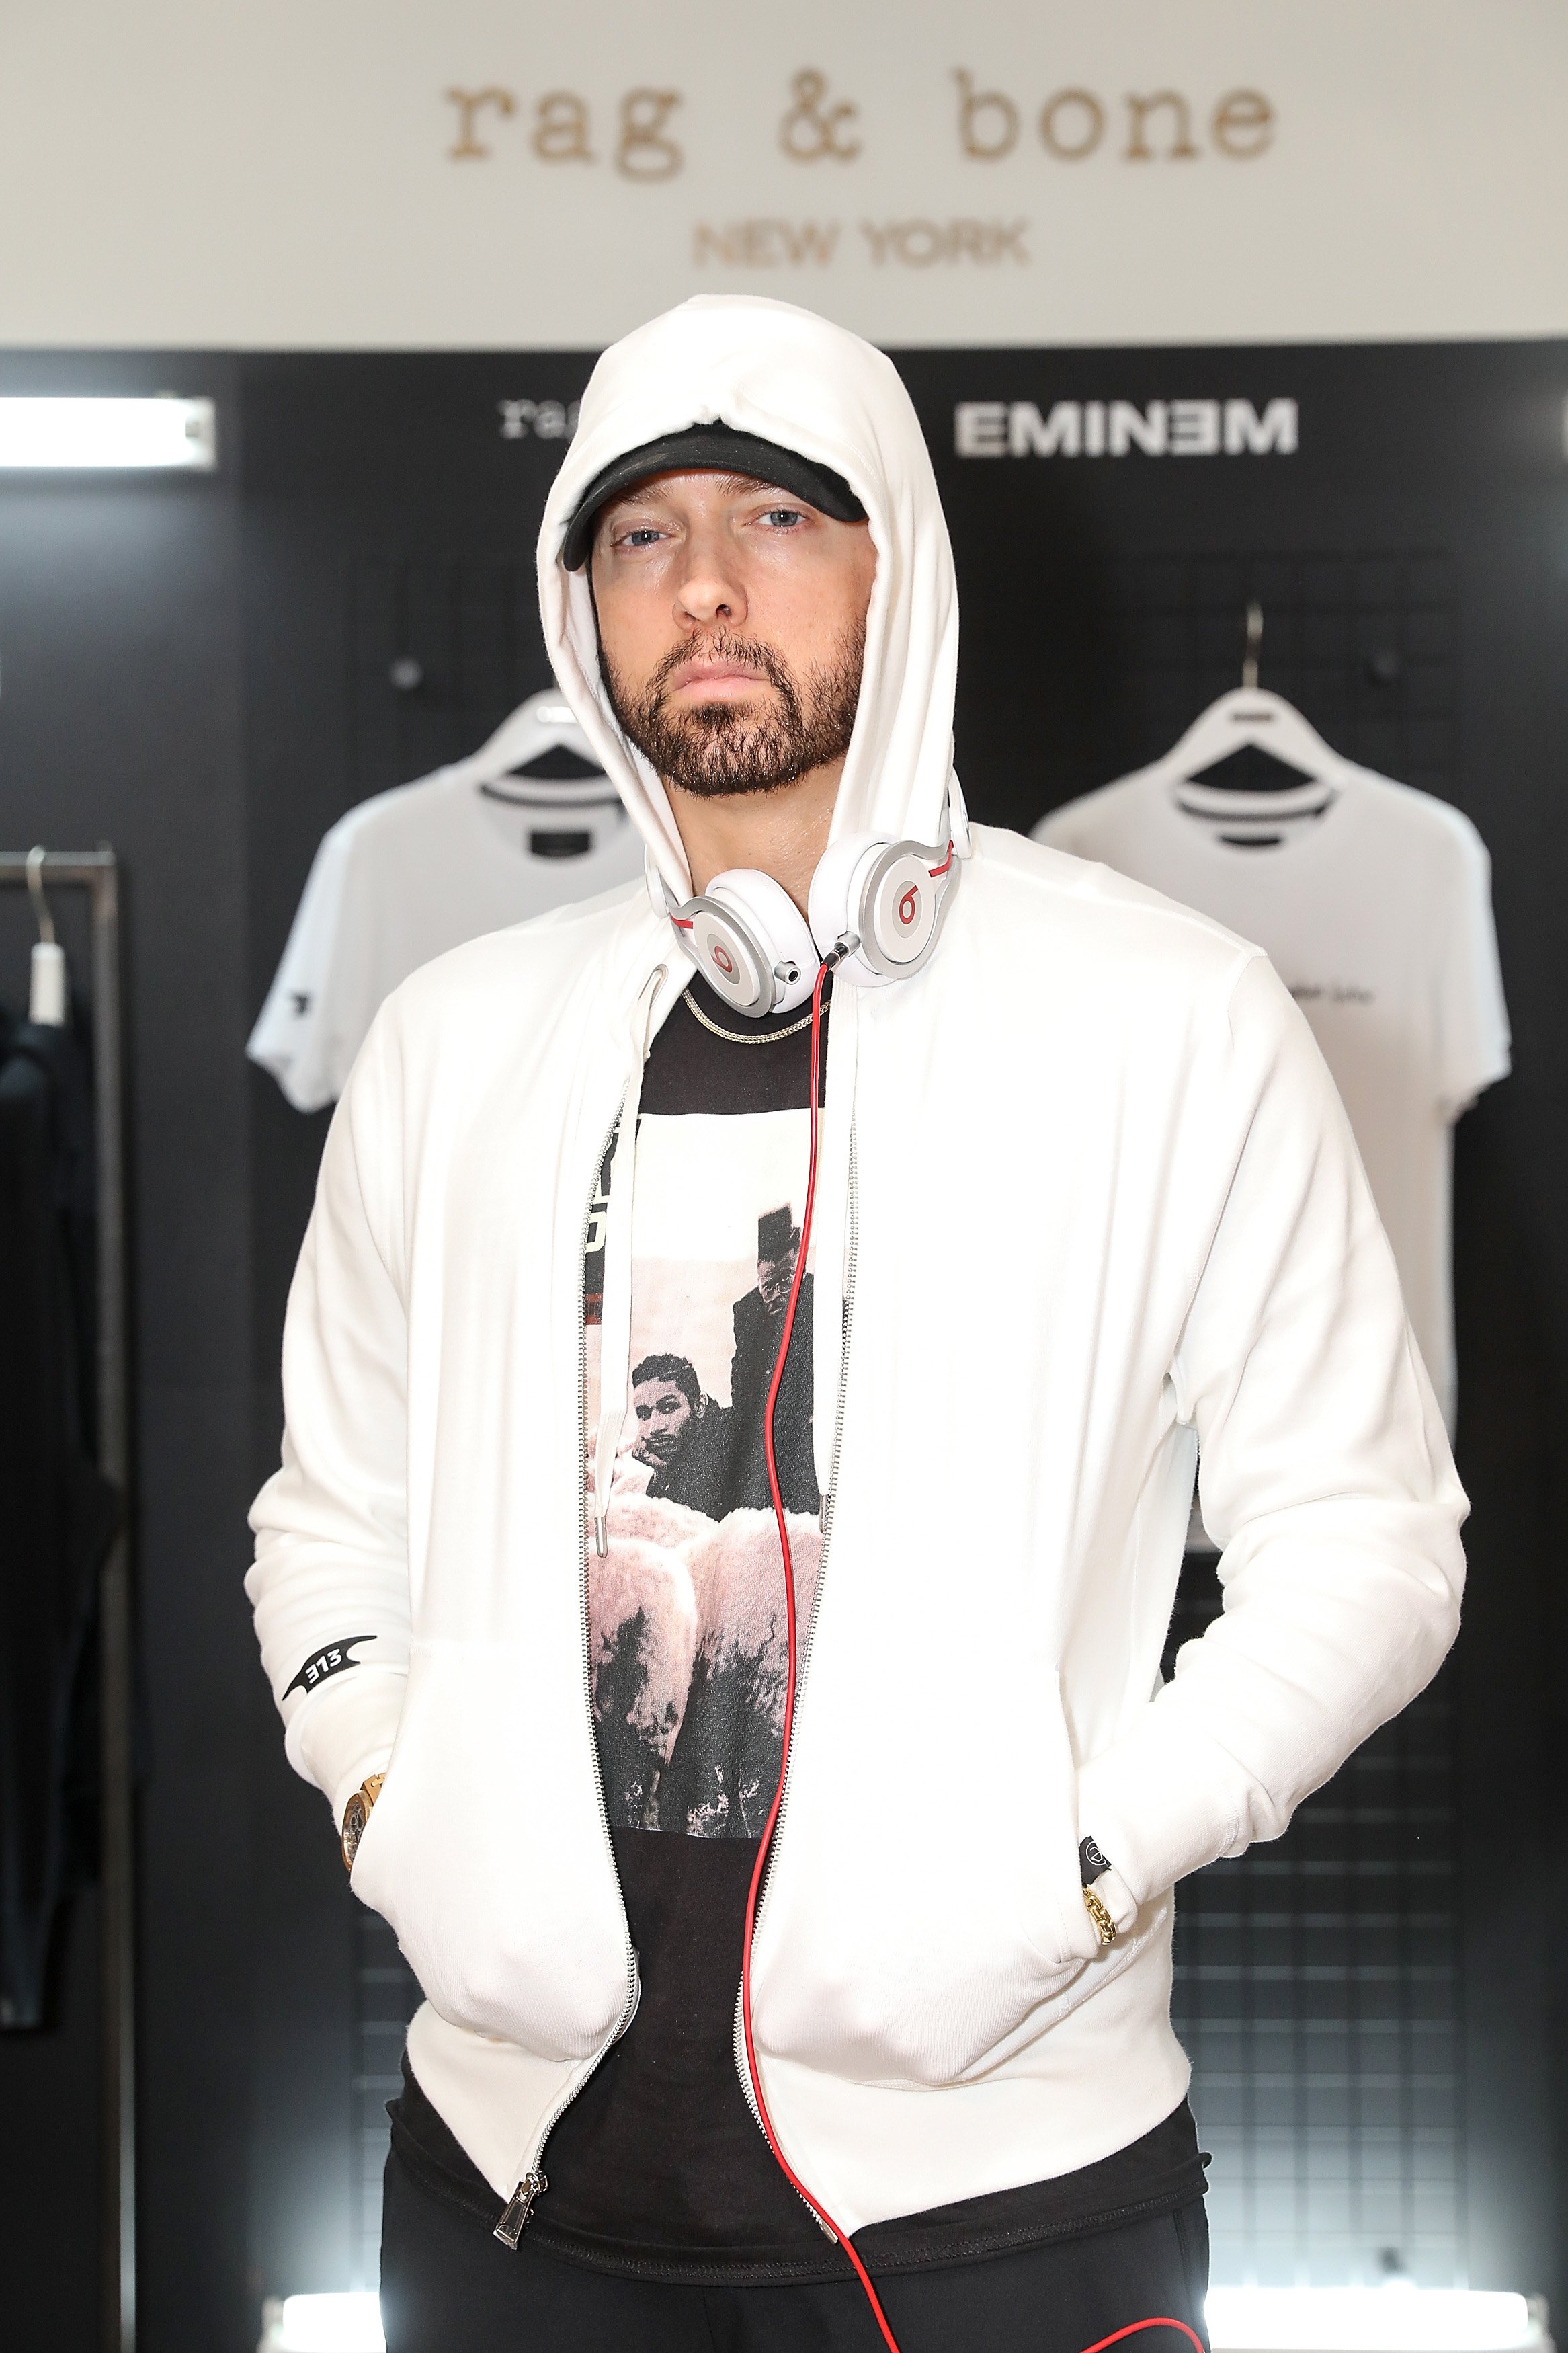  Eminem attends the rag & bone X Eminem London Pop-Up Opening on July 13, 2018 | Photo: GettyImages